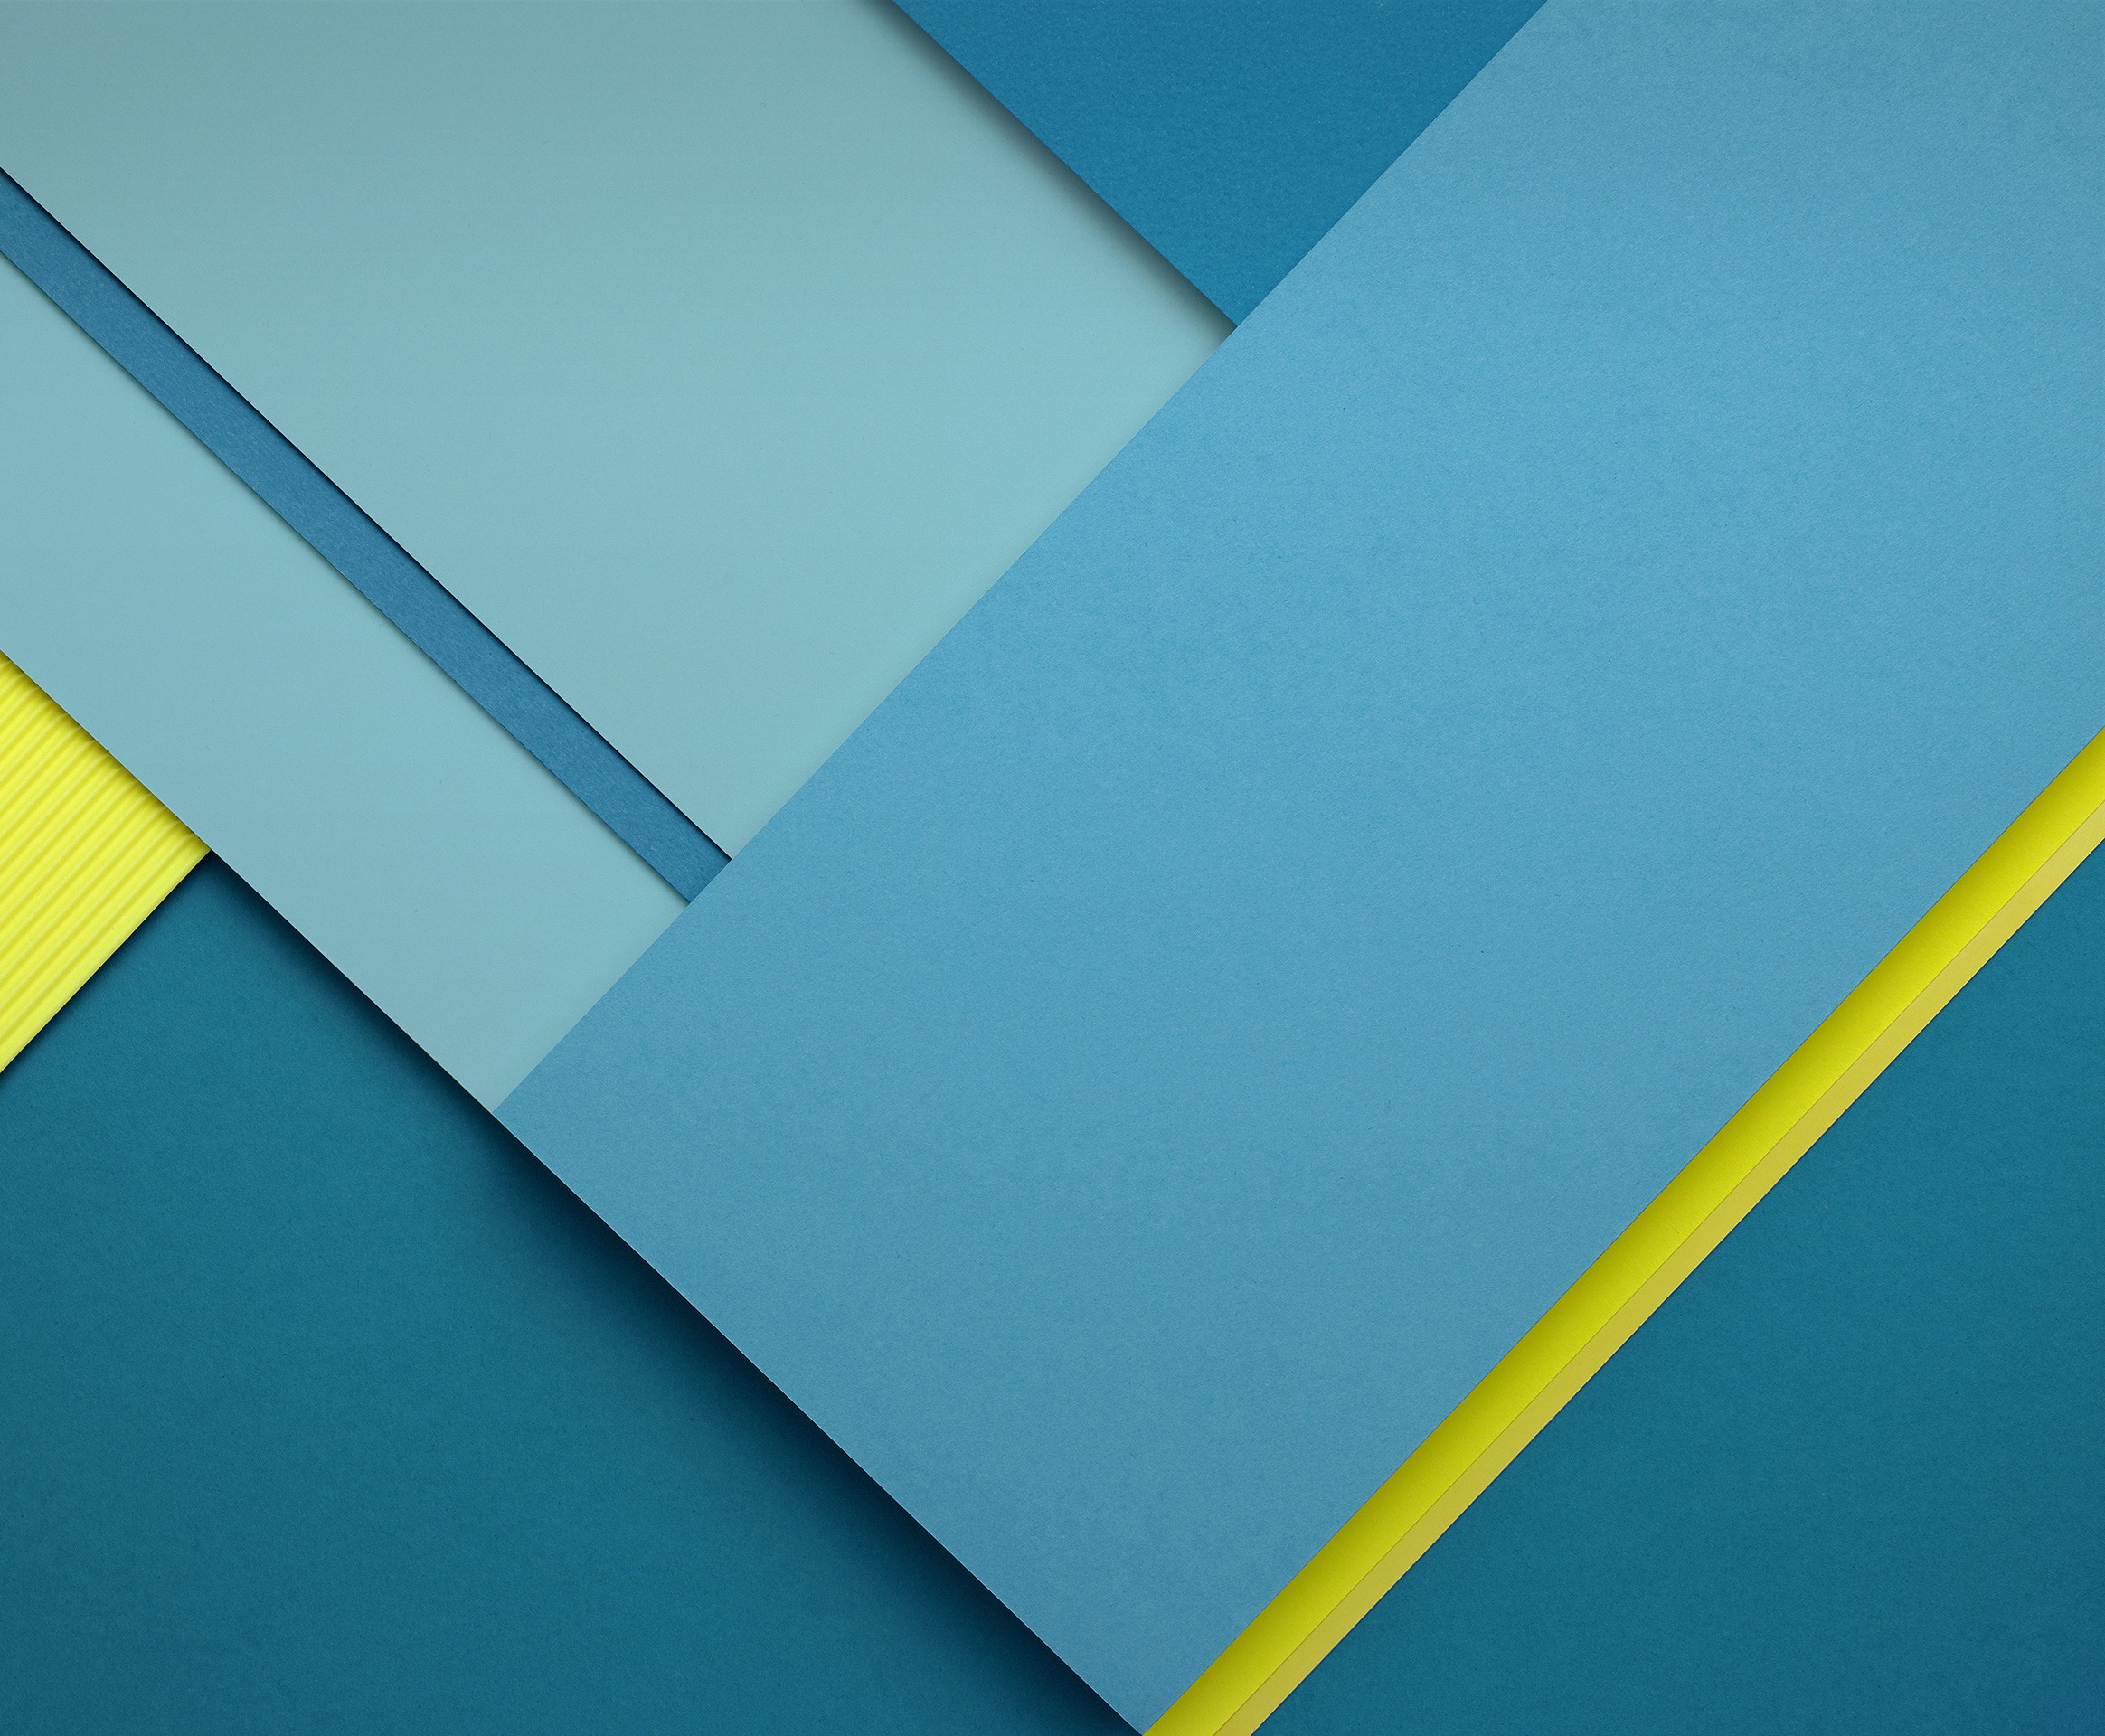 Nexus 7 stock wallpaper pack